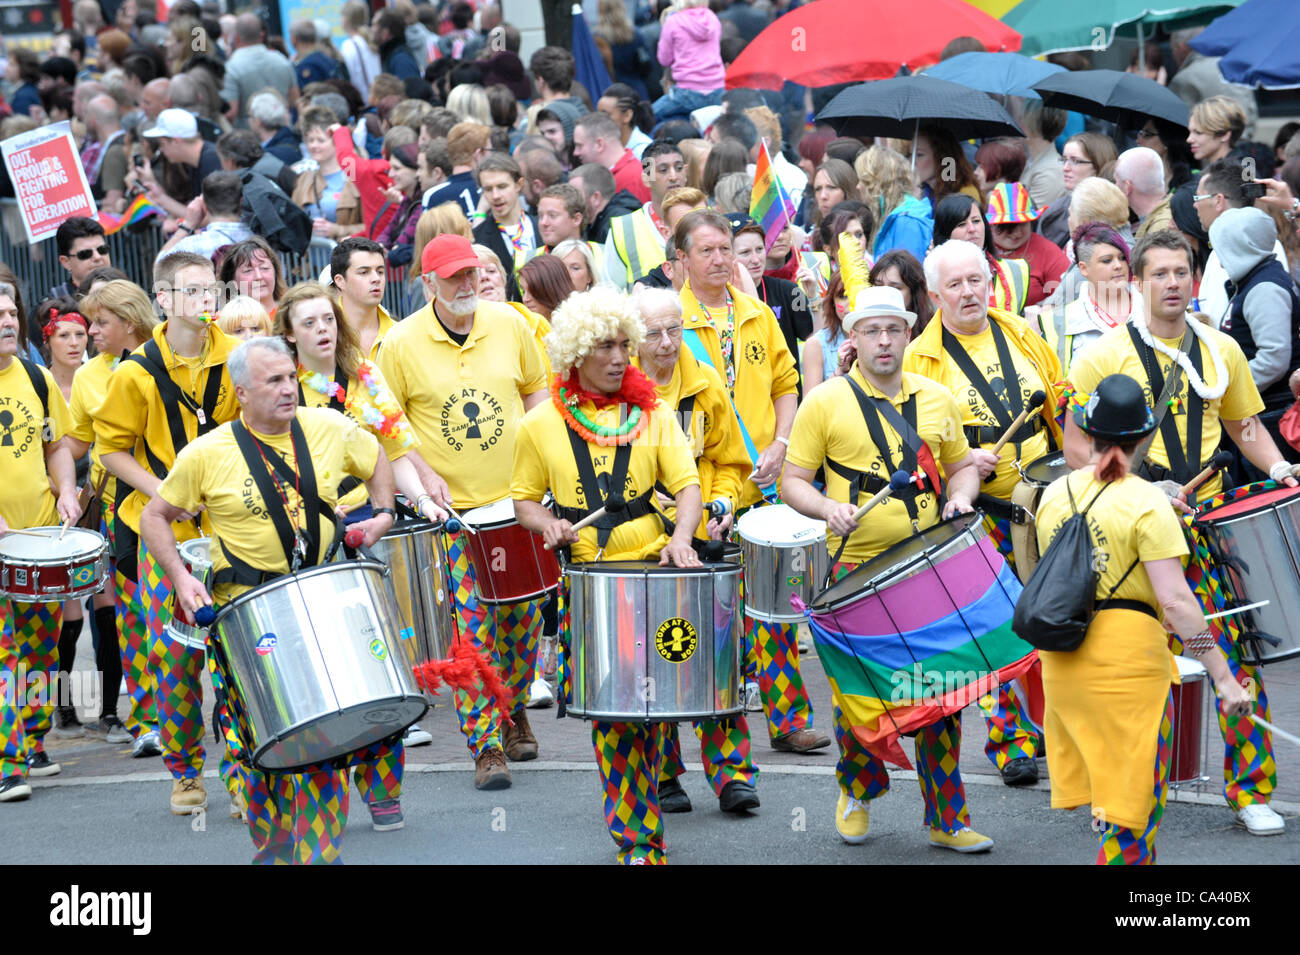 Marching Samba band in yellow t shirts drum and walk past crowds watching Birmingham Pride parade celebrating gay rights Stock Photo